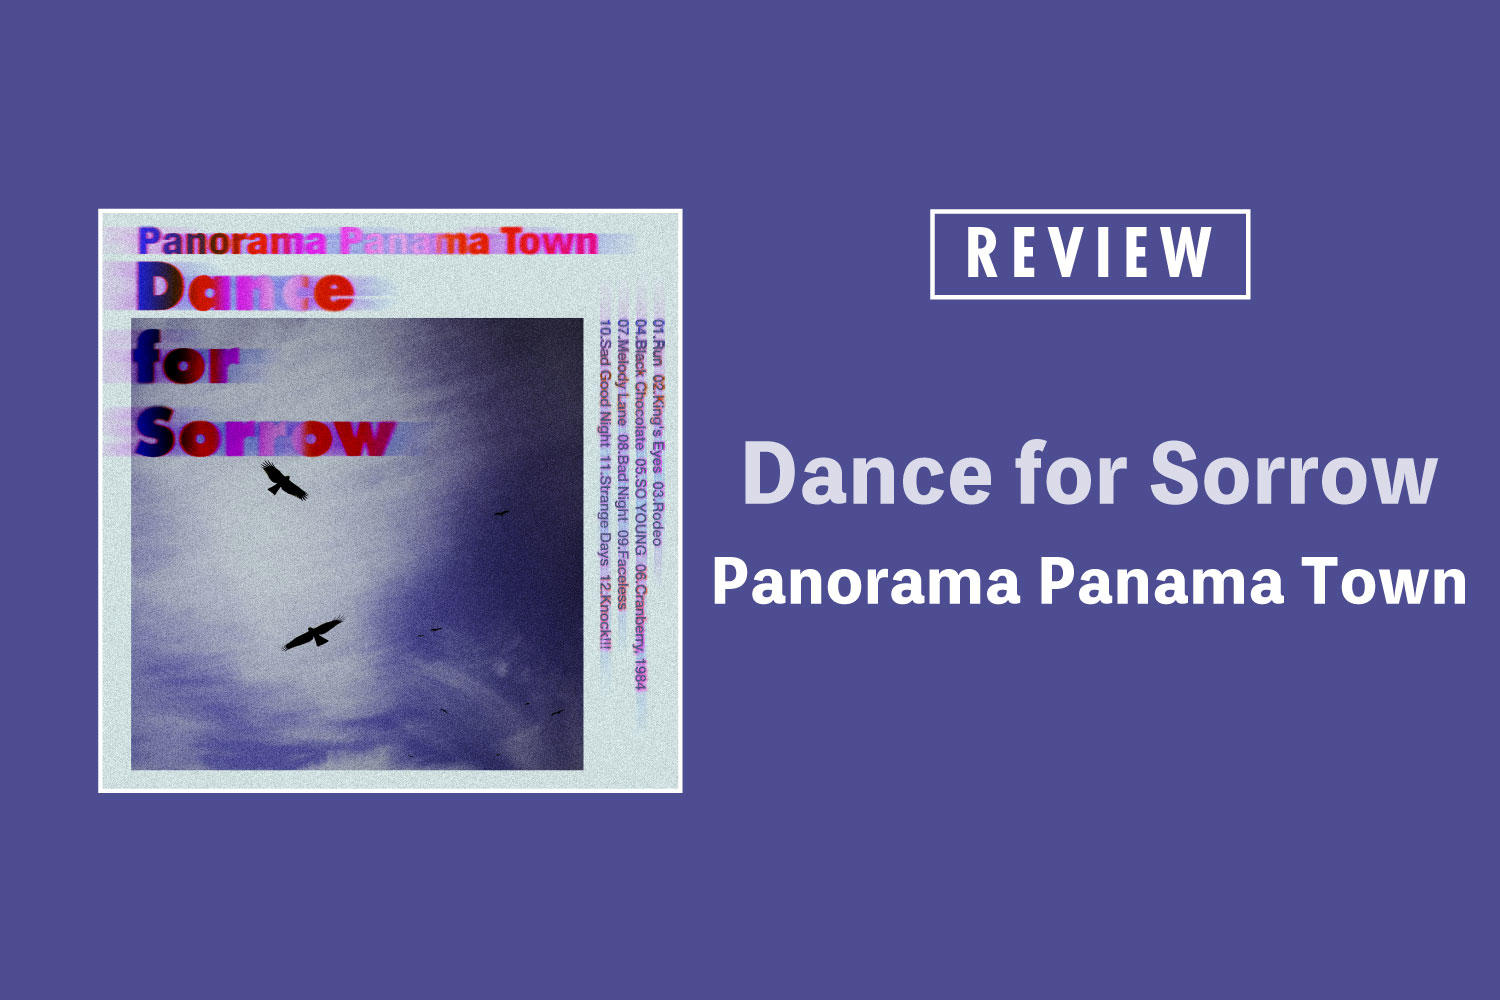 Panorama Panama Town「Dance for Sorrow」──熟成を重ねた進化を示す約4年ぶりのフルアルバム